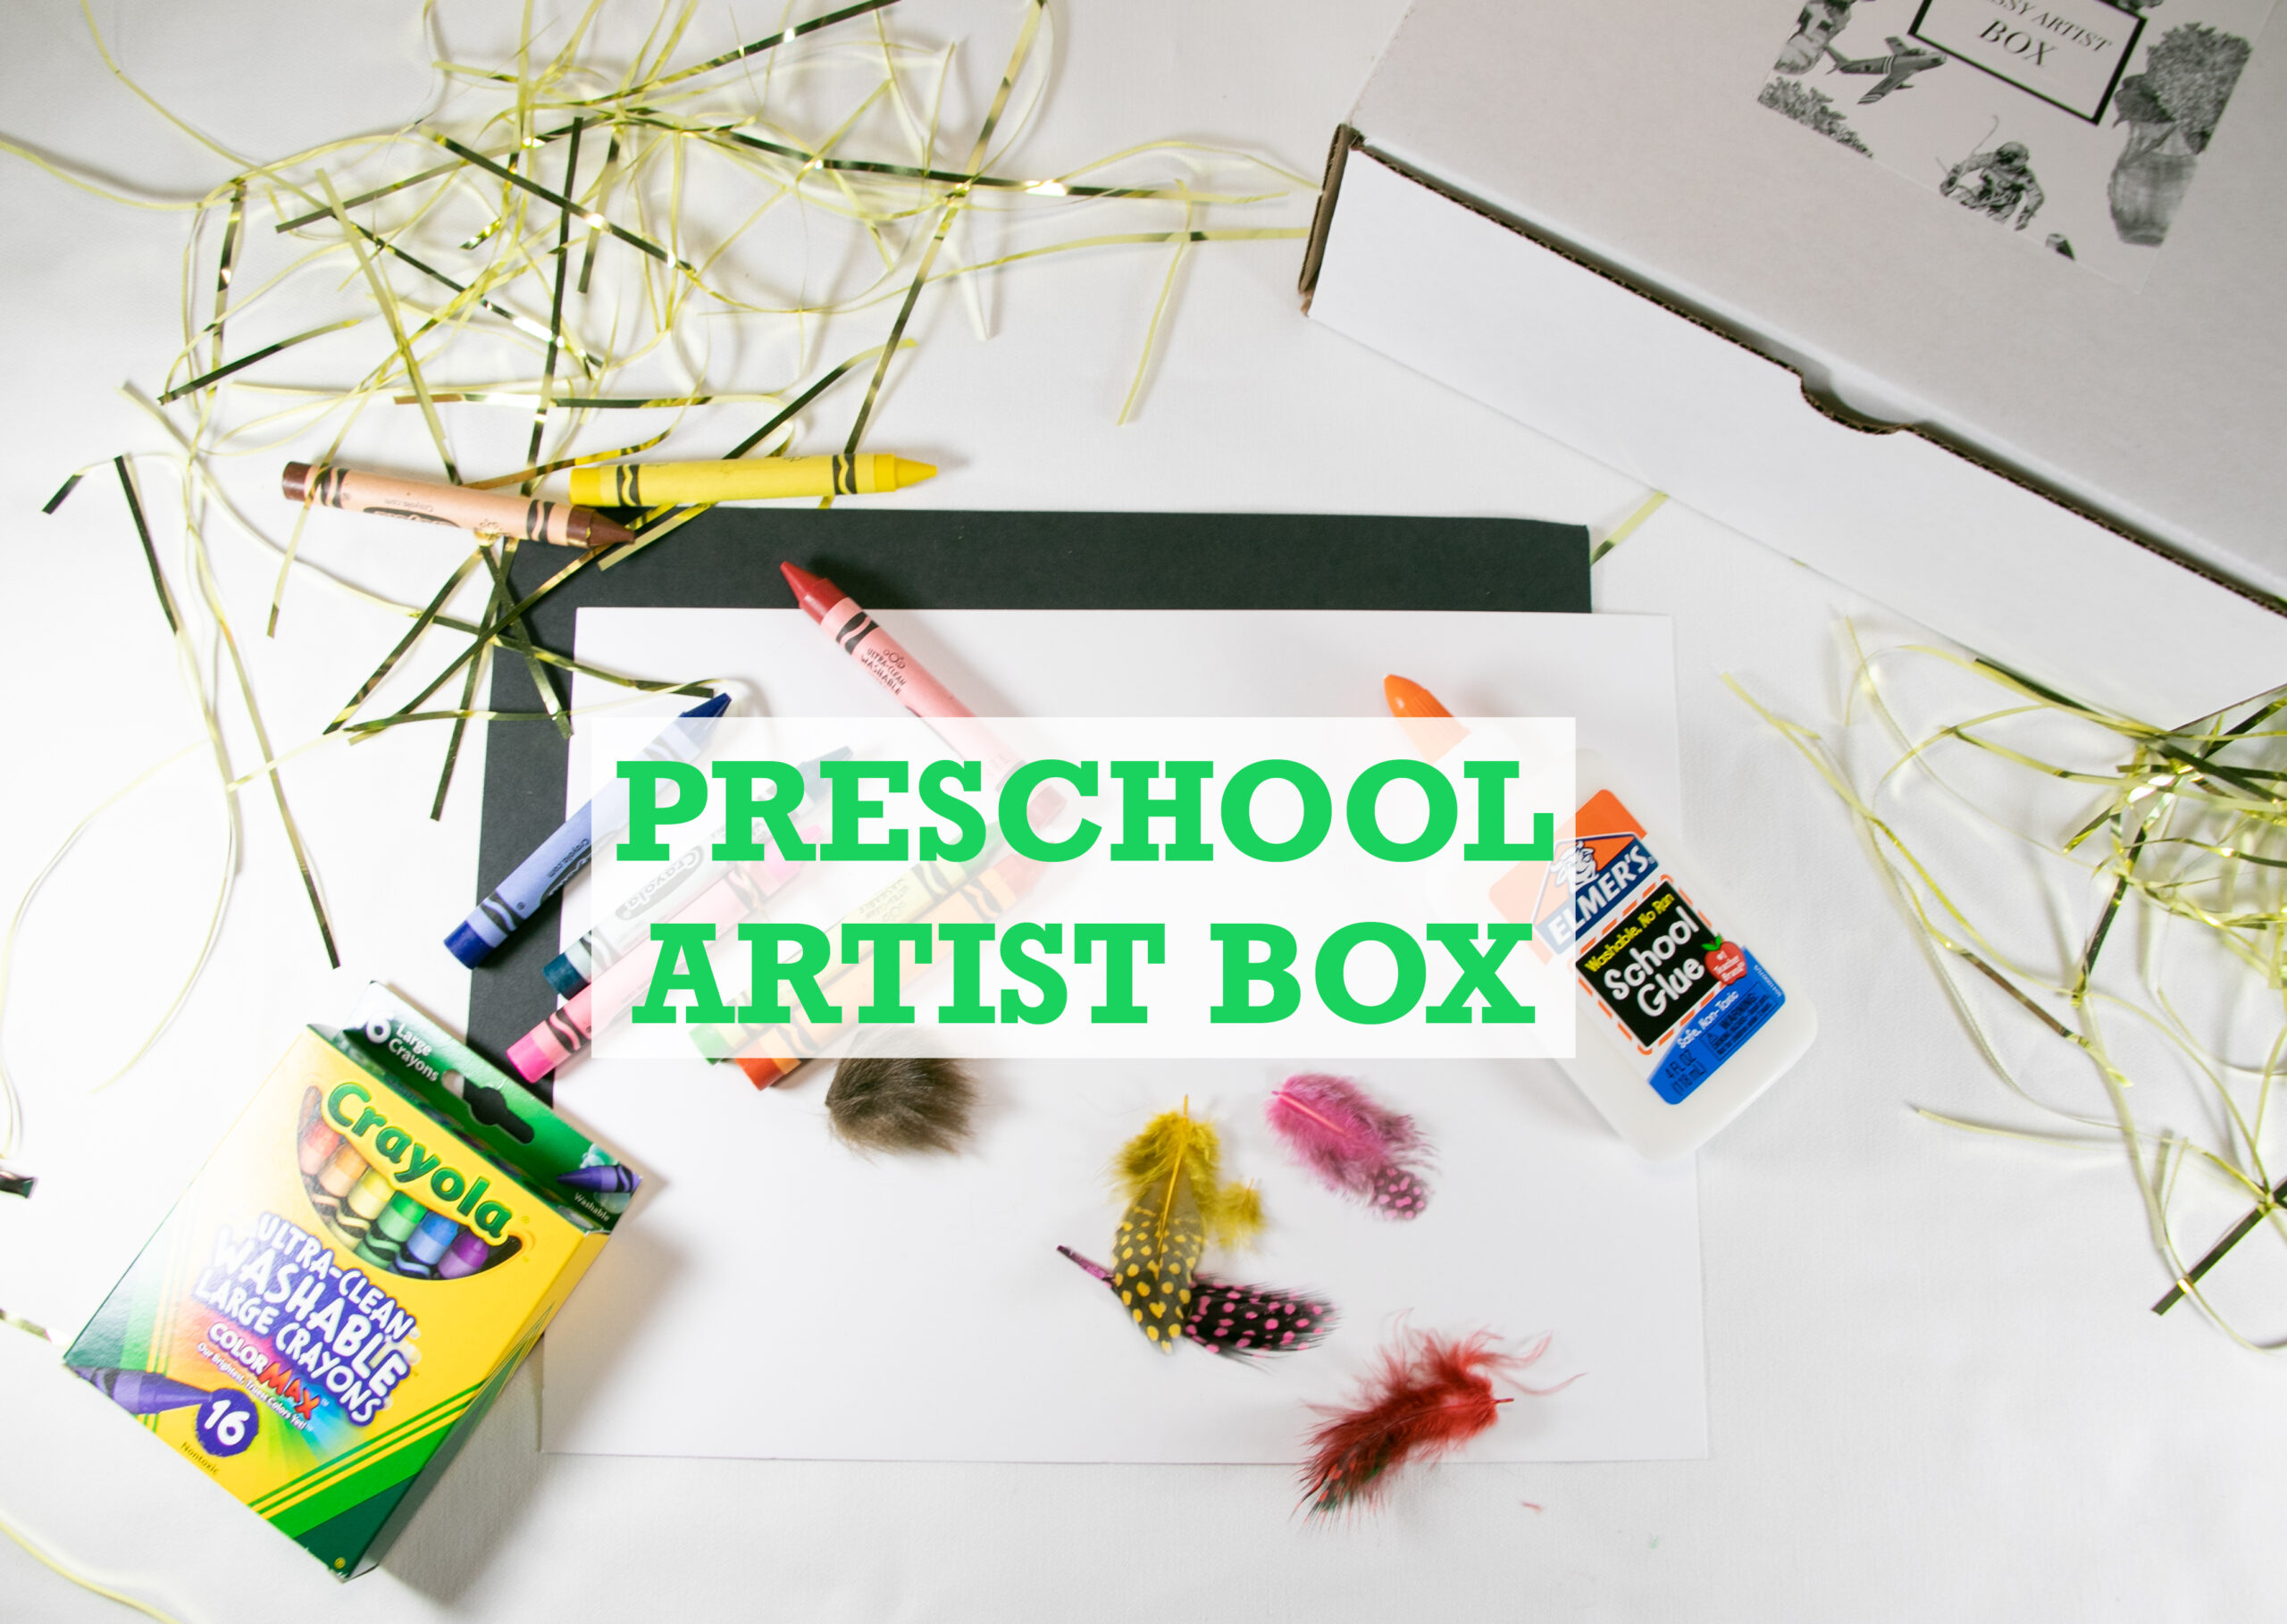 Kids Artwork and Paperwork Storage Boxes - Spot of Tea Designs